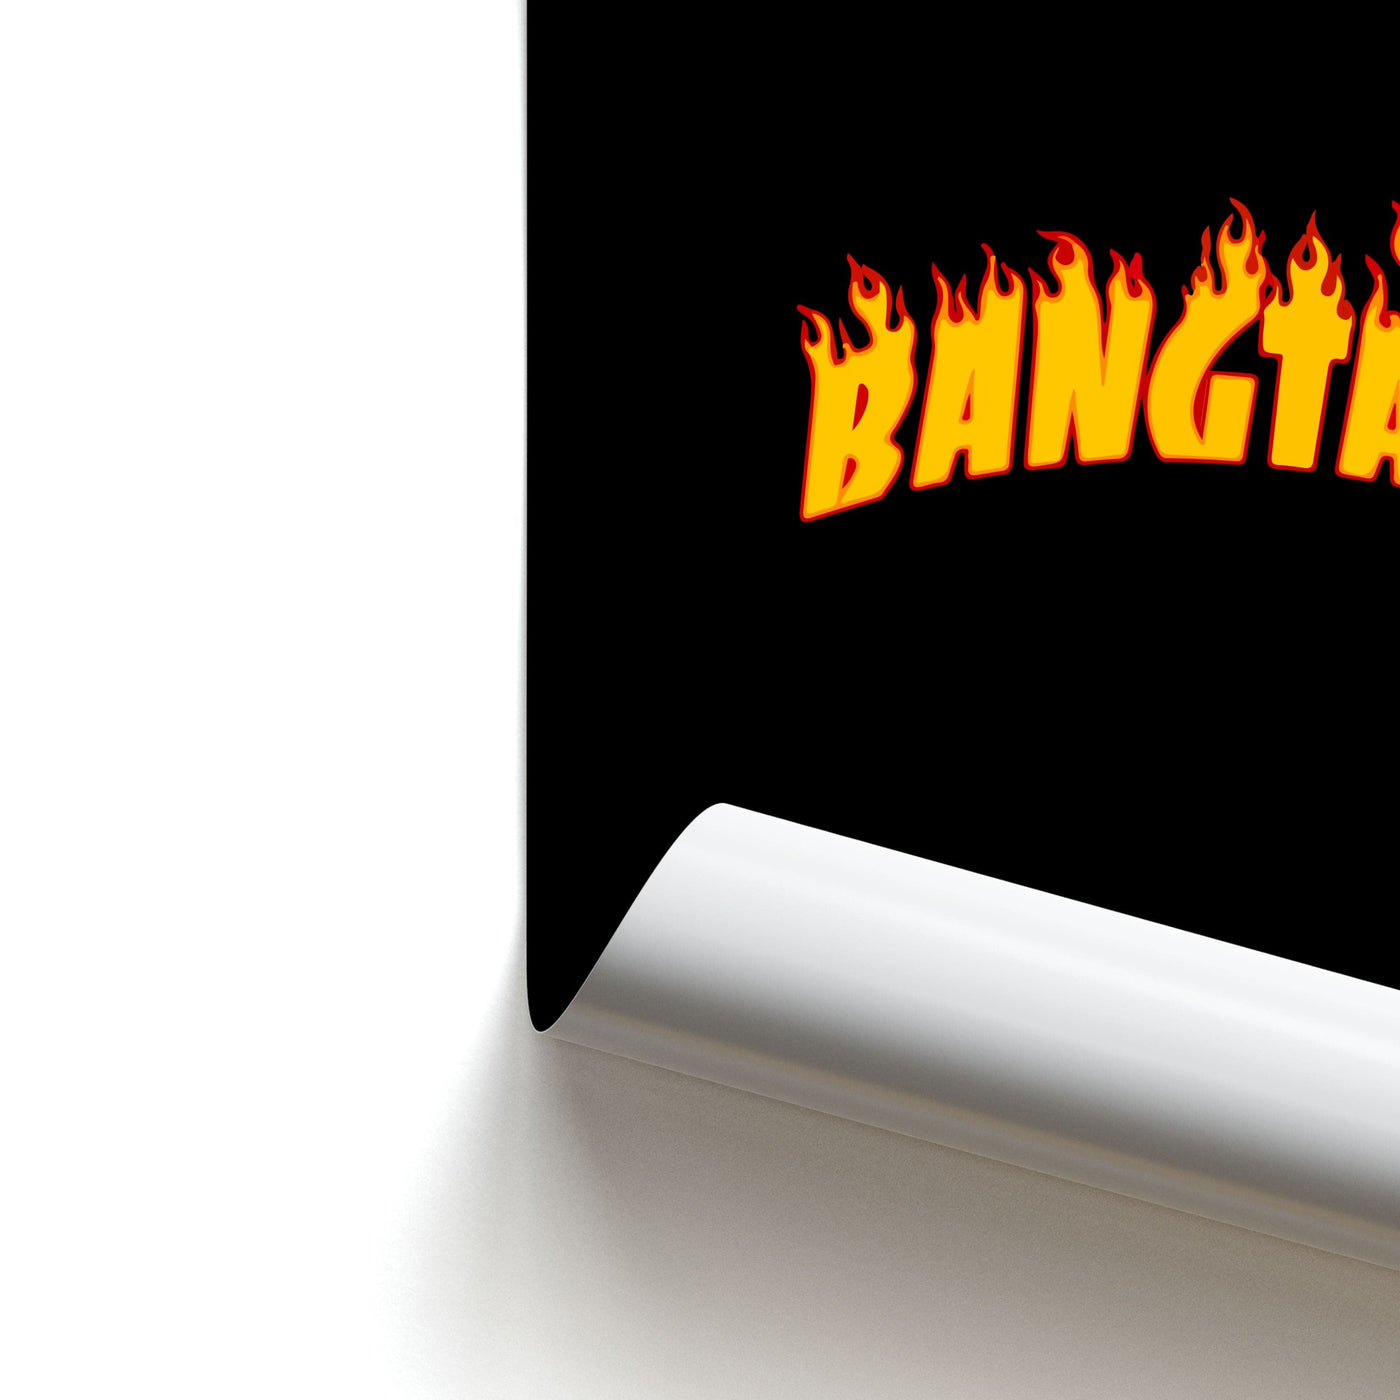 Bangtan Flames - BTS Poster